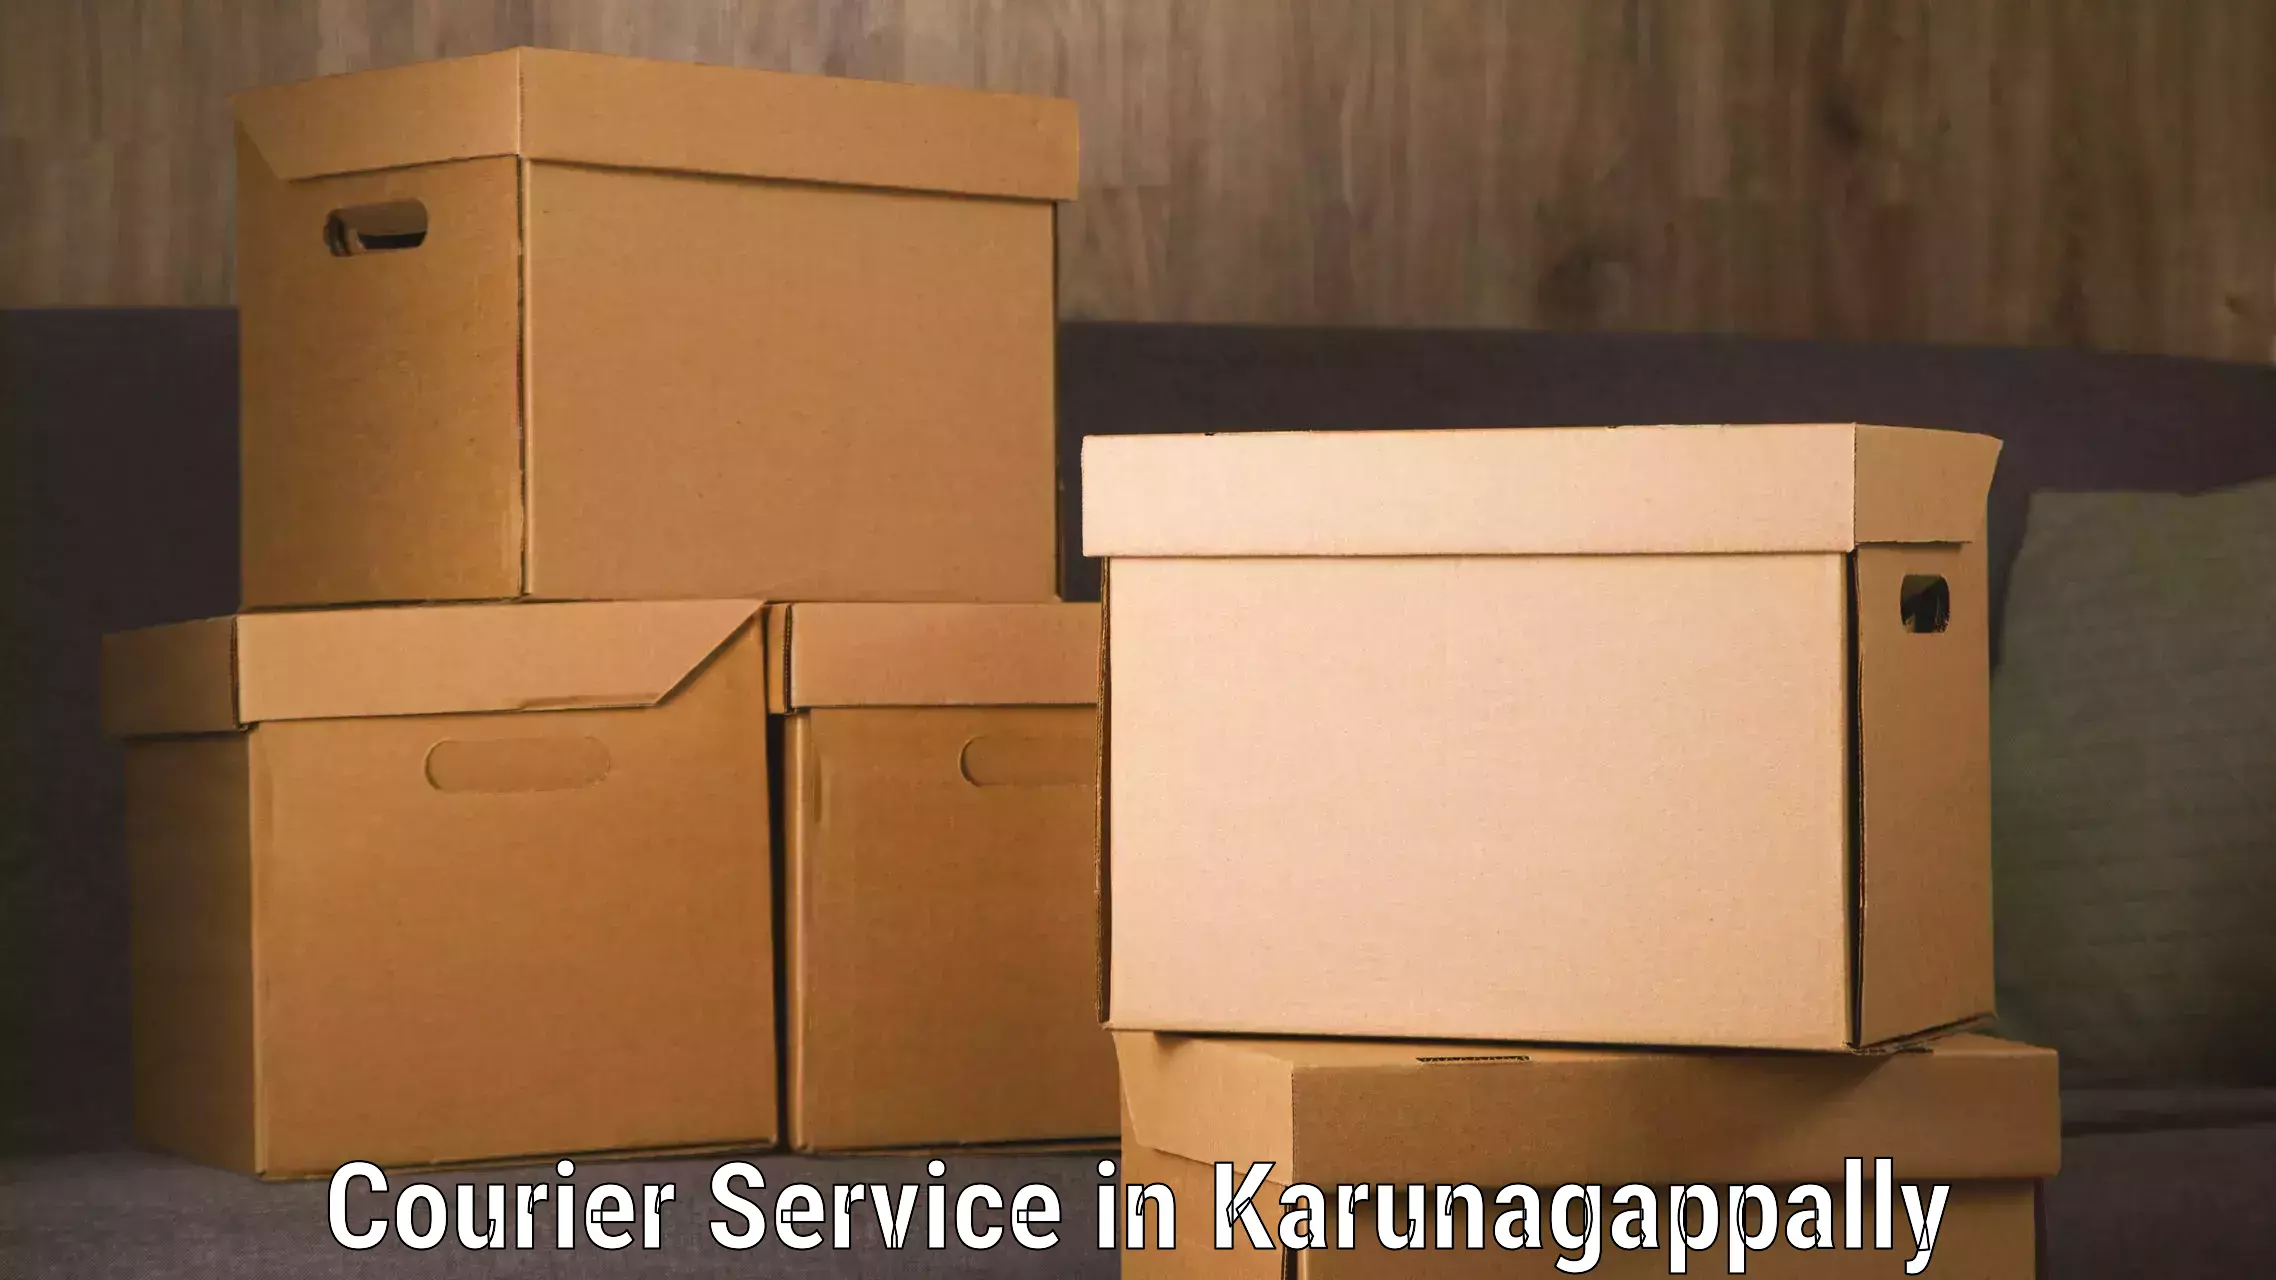 Fastest parcel delivery in Karunagappally